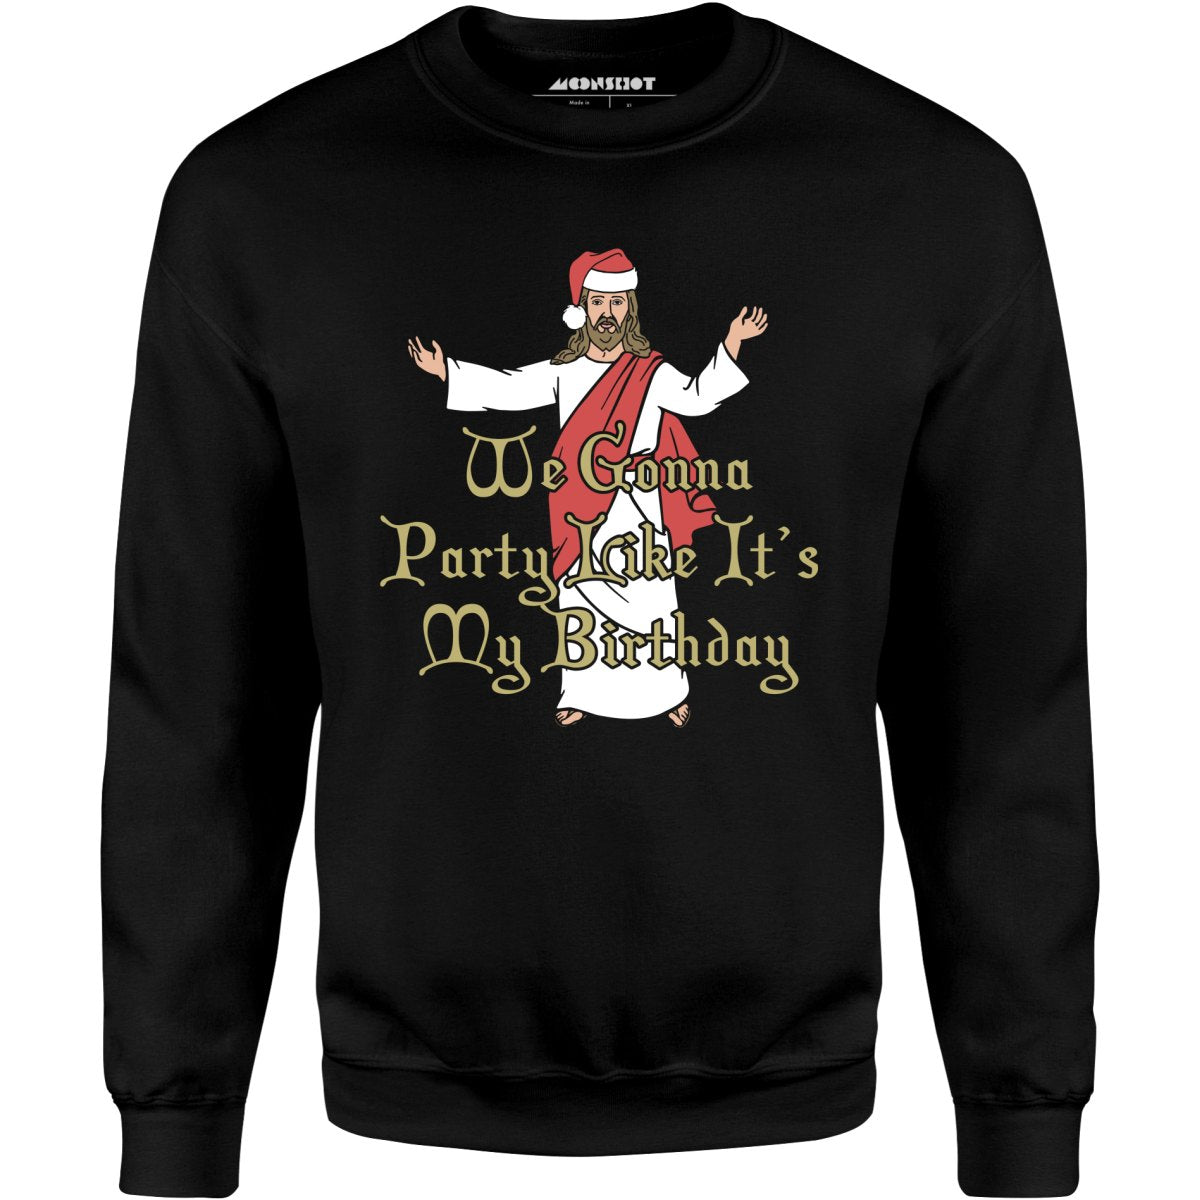 We Gonna Party Like It's My Birthday - Unisex Sweatshirt